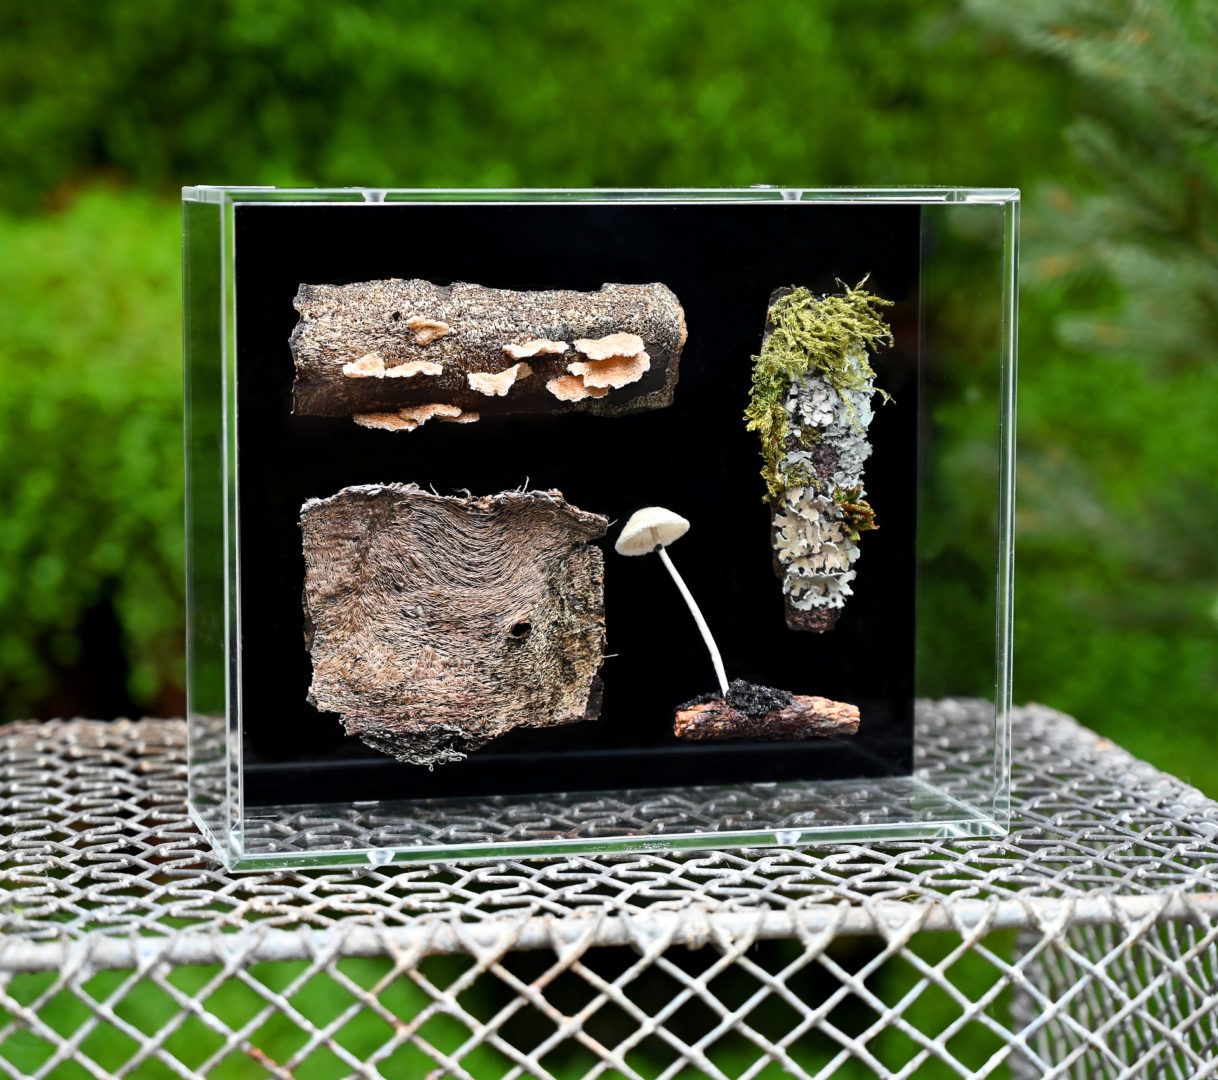 Amanda Cobbett Sculpture – Plicaturopsis crispa, Betula, Amblystegium serpens, Punctelia subrudecta, Hypotrachyna revoluta, Mycena rorida